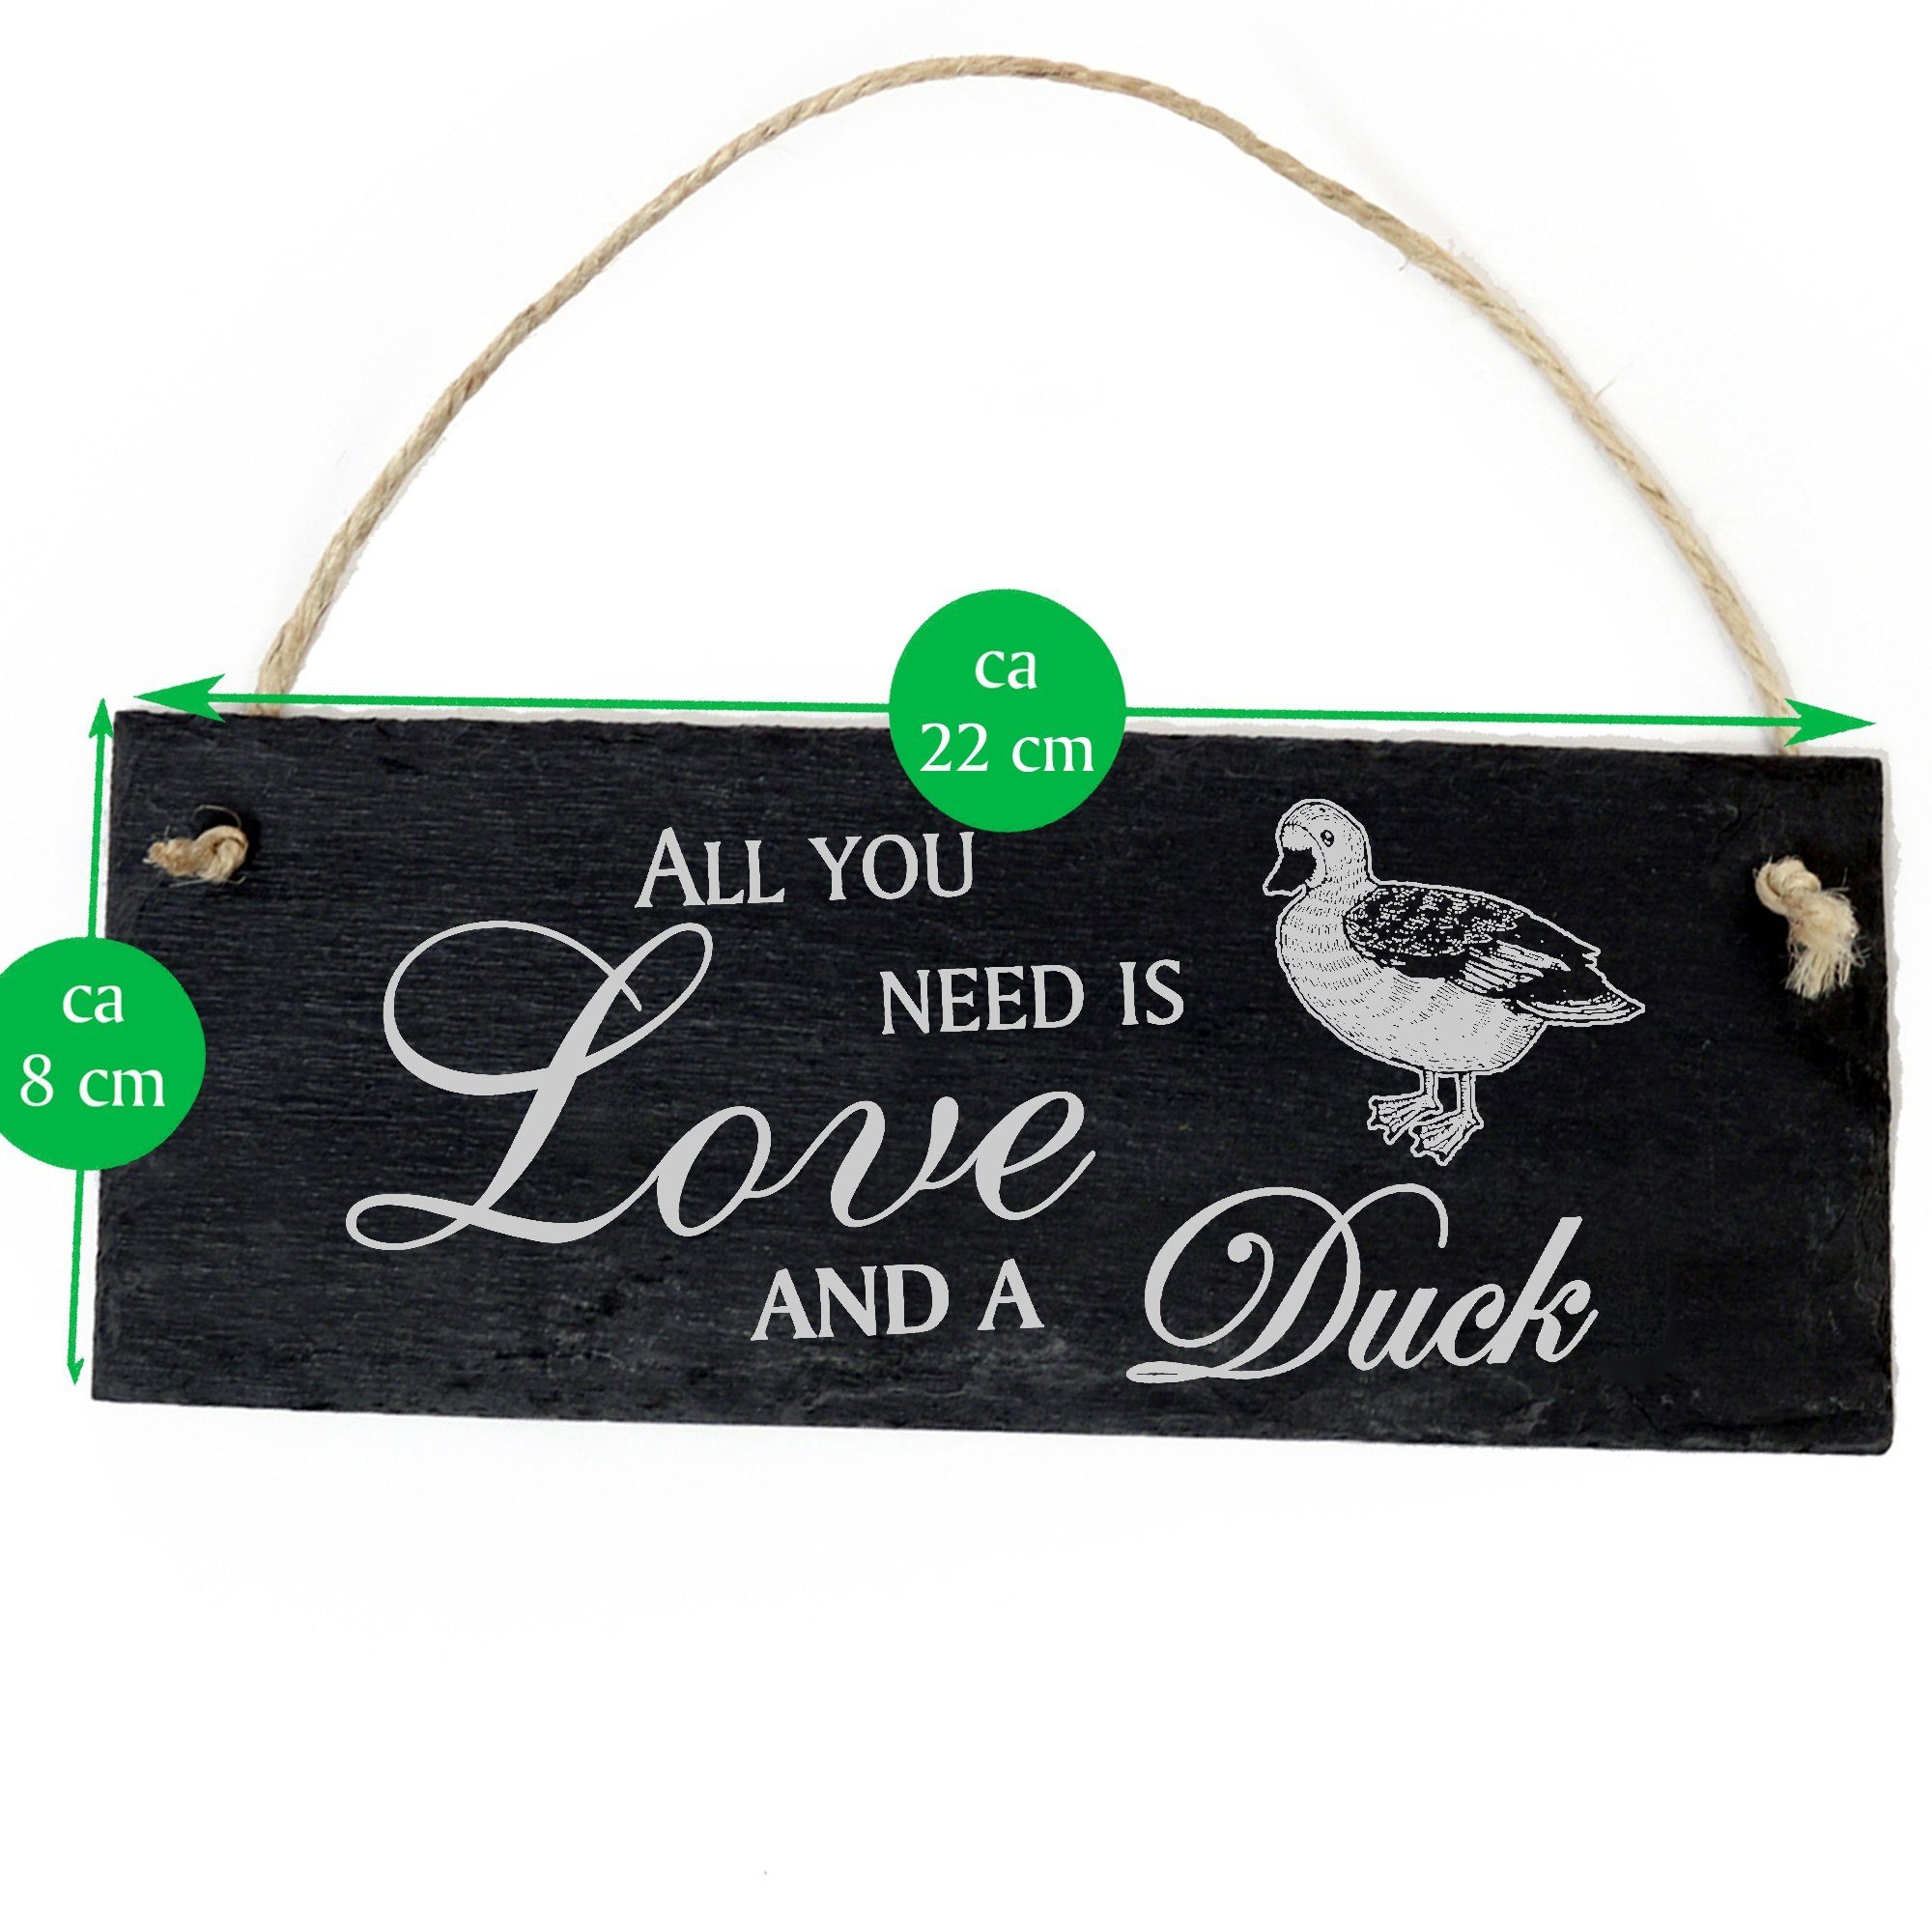 Ente Love 22x8cm need Dekolando All you is Duck a and Hängedekoration